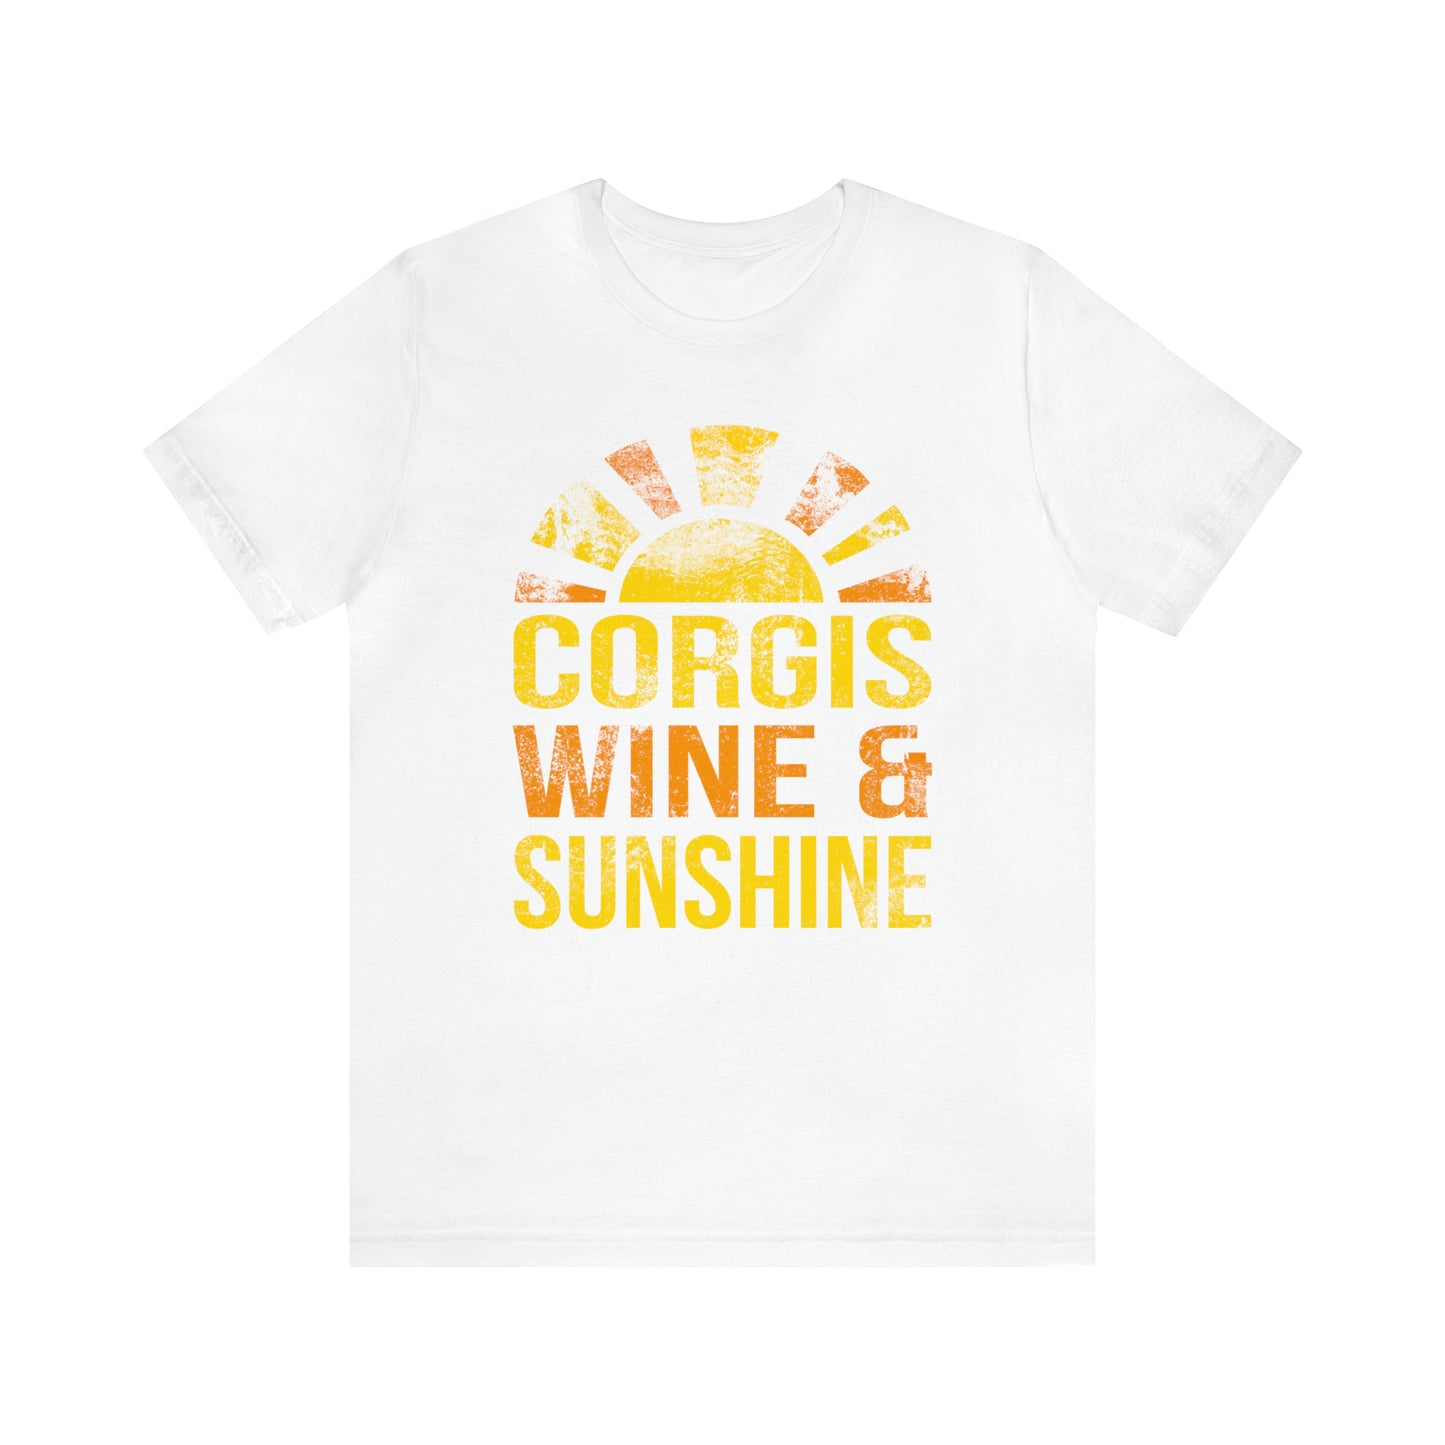 white corgis wine sunshine summer woman man t-shirt unisex short sleeve shirt grunge distressed